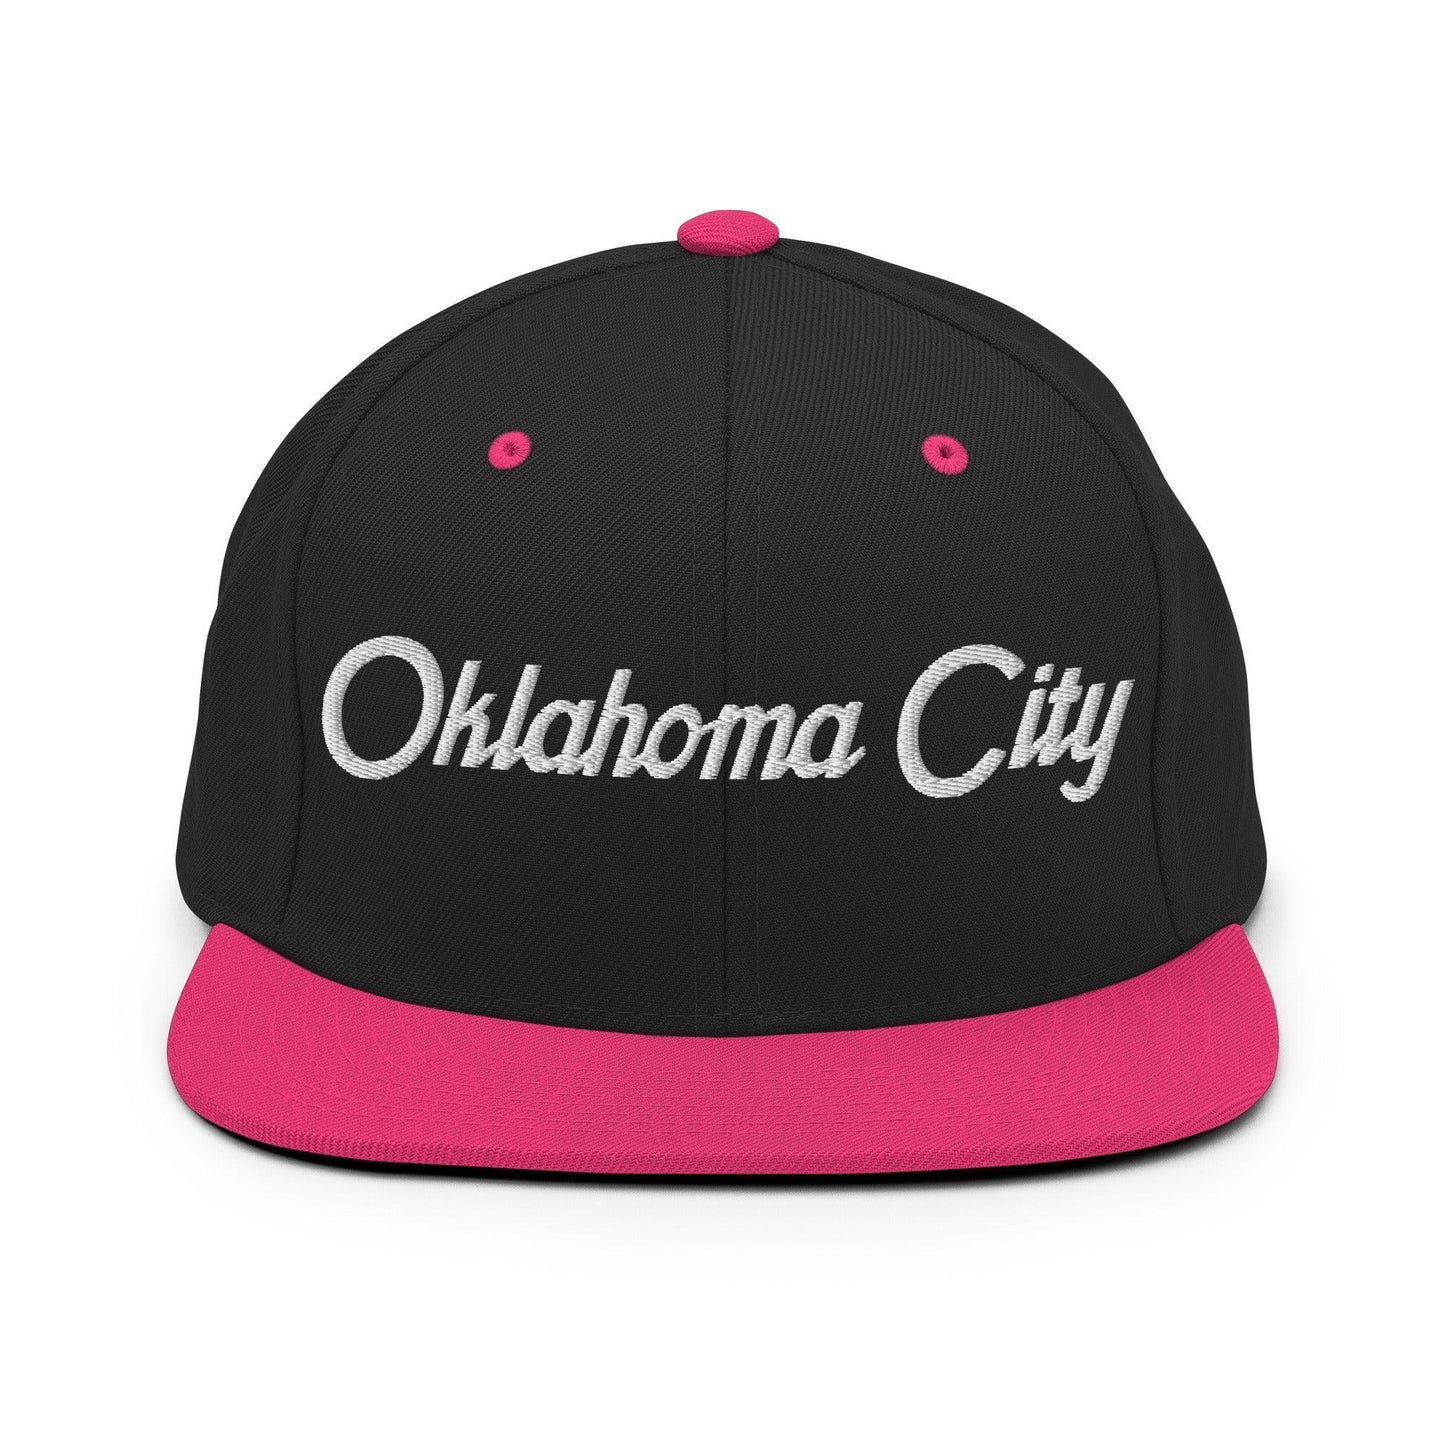 Oklahoma City Script Snapback Hat Black Neon Pink